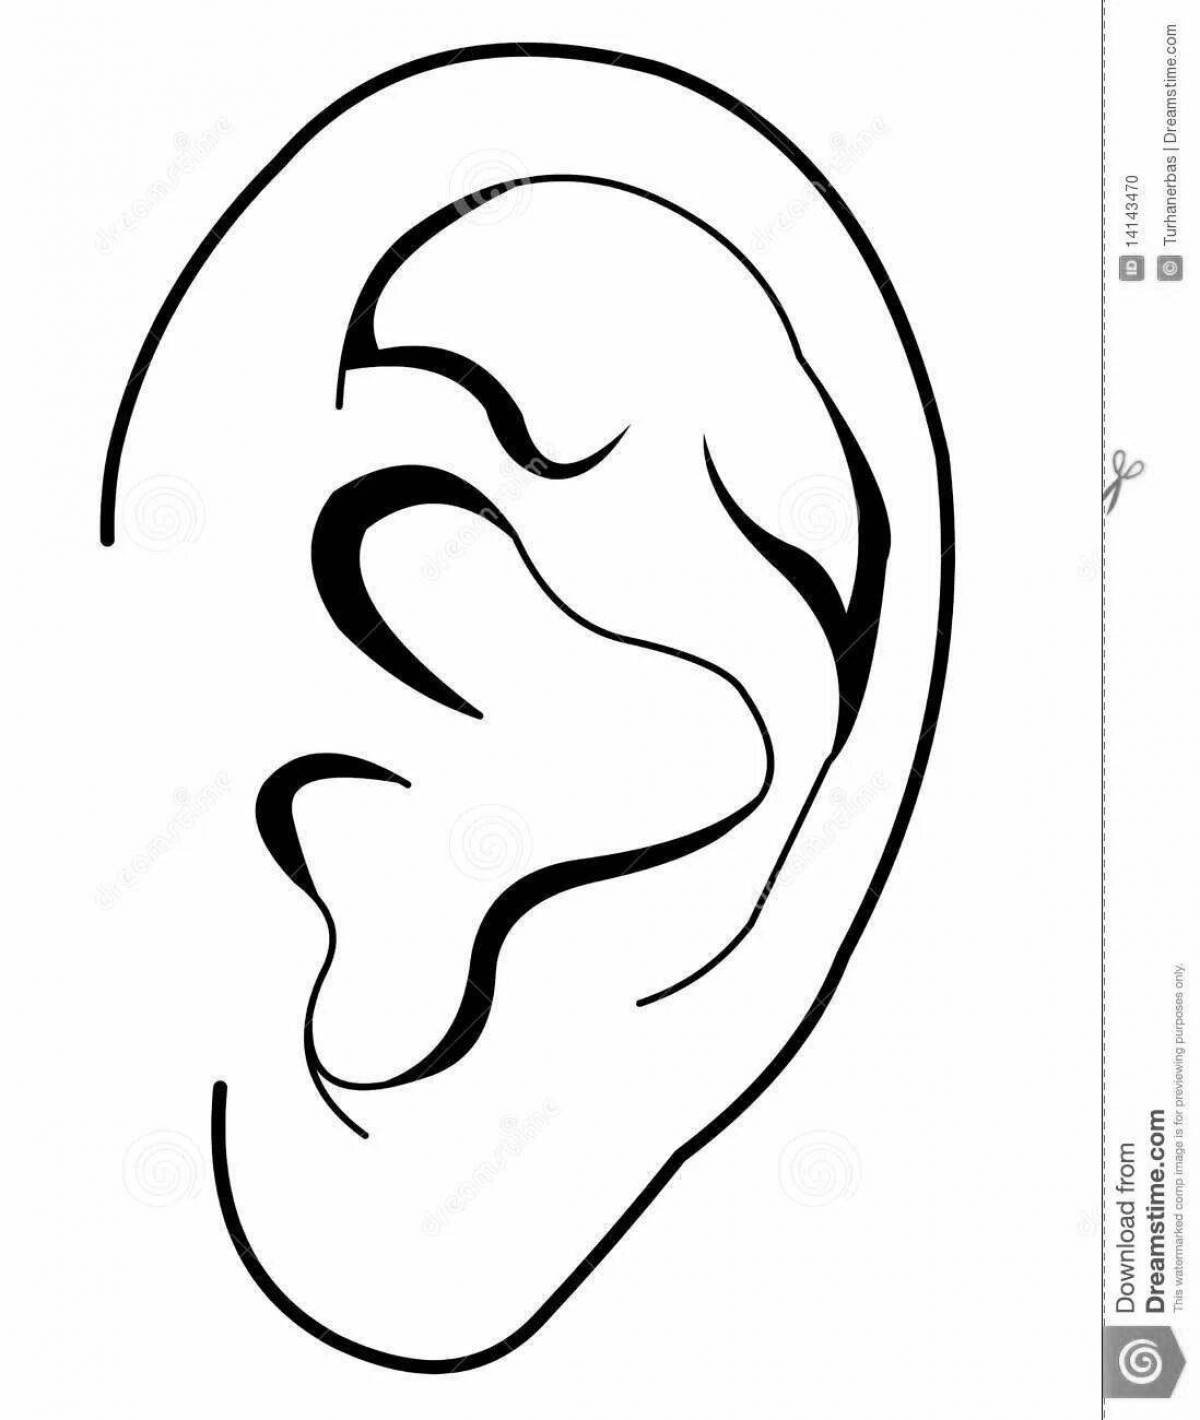 Child ear #1